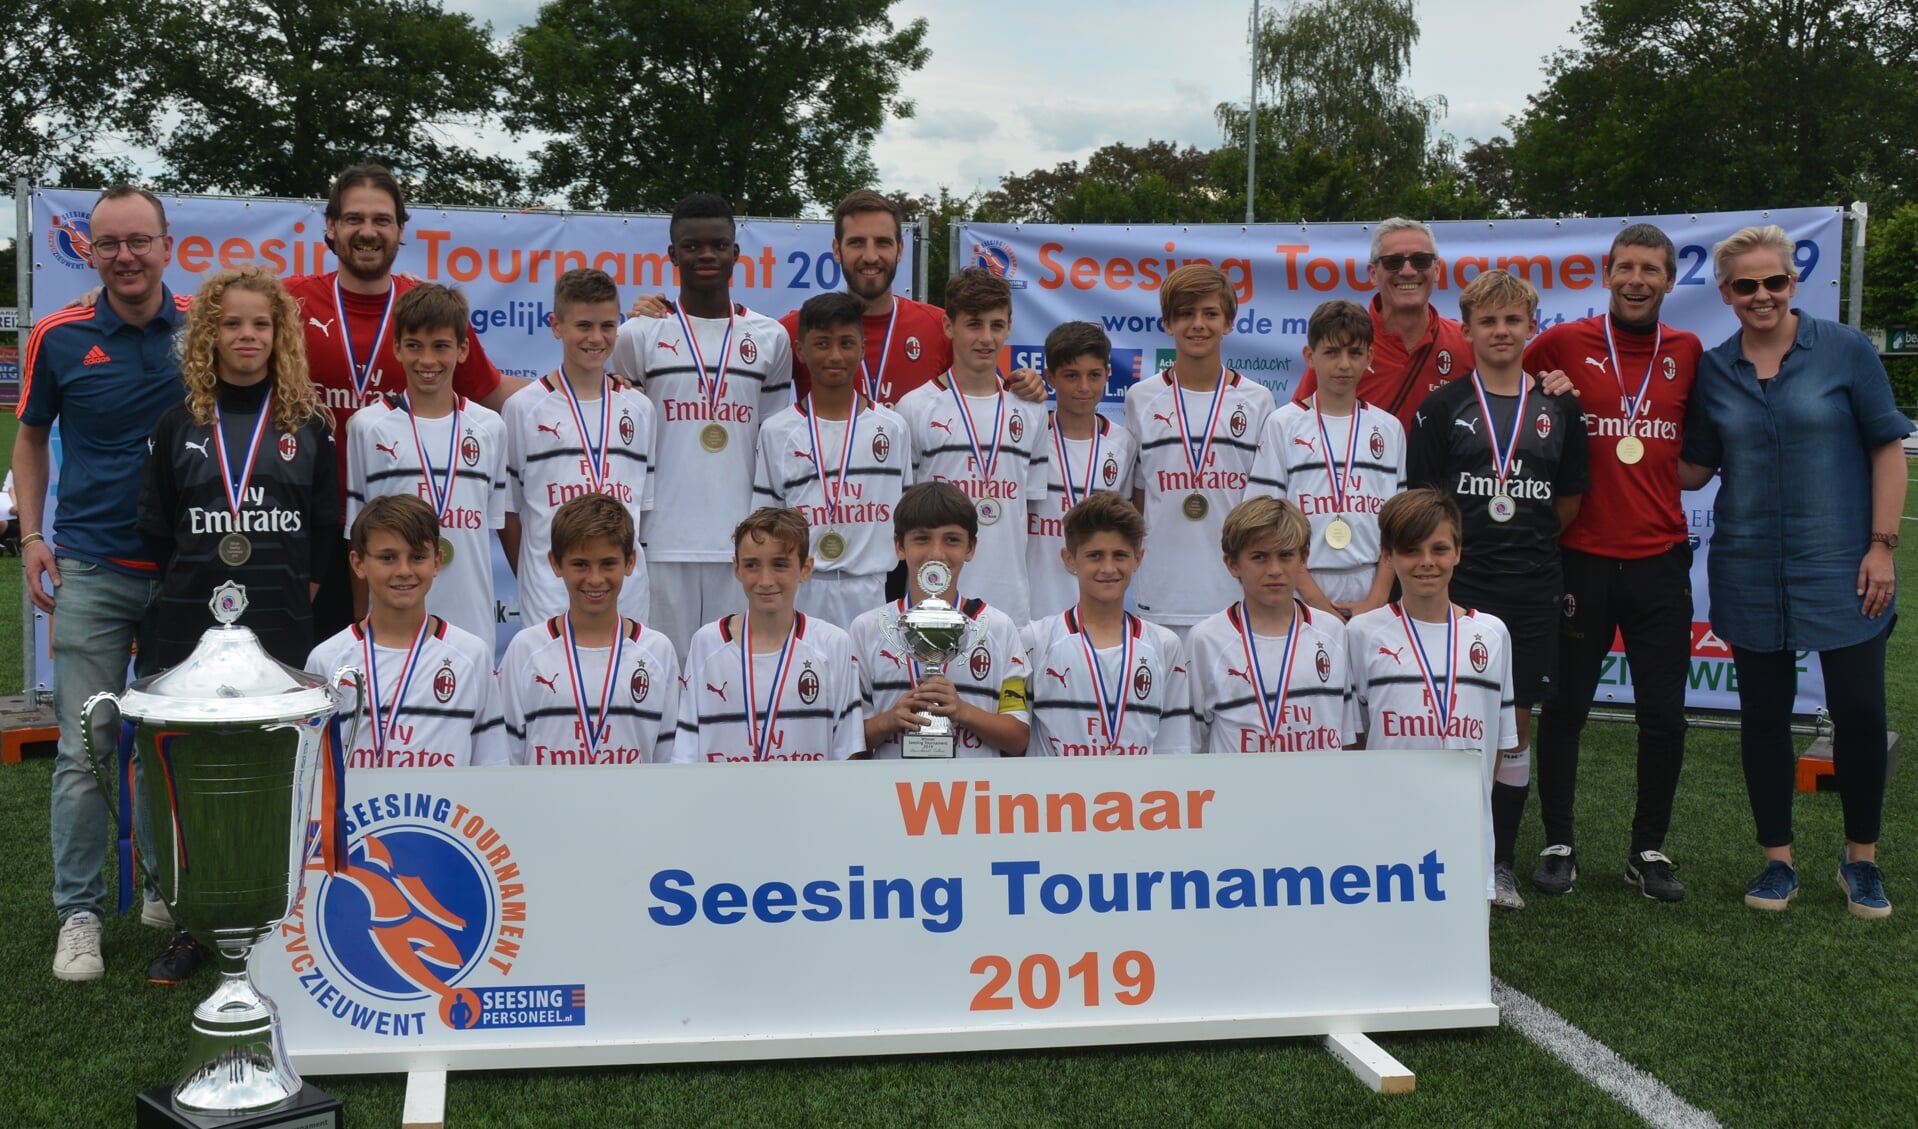 Het winnende team van het Seesing Tournament 2019: AC Milan U12. Foto: PR Seesing Tournament/archief Achterhoek Nieuws